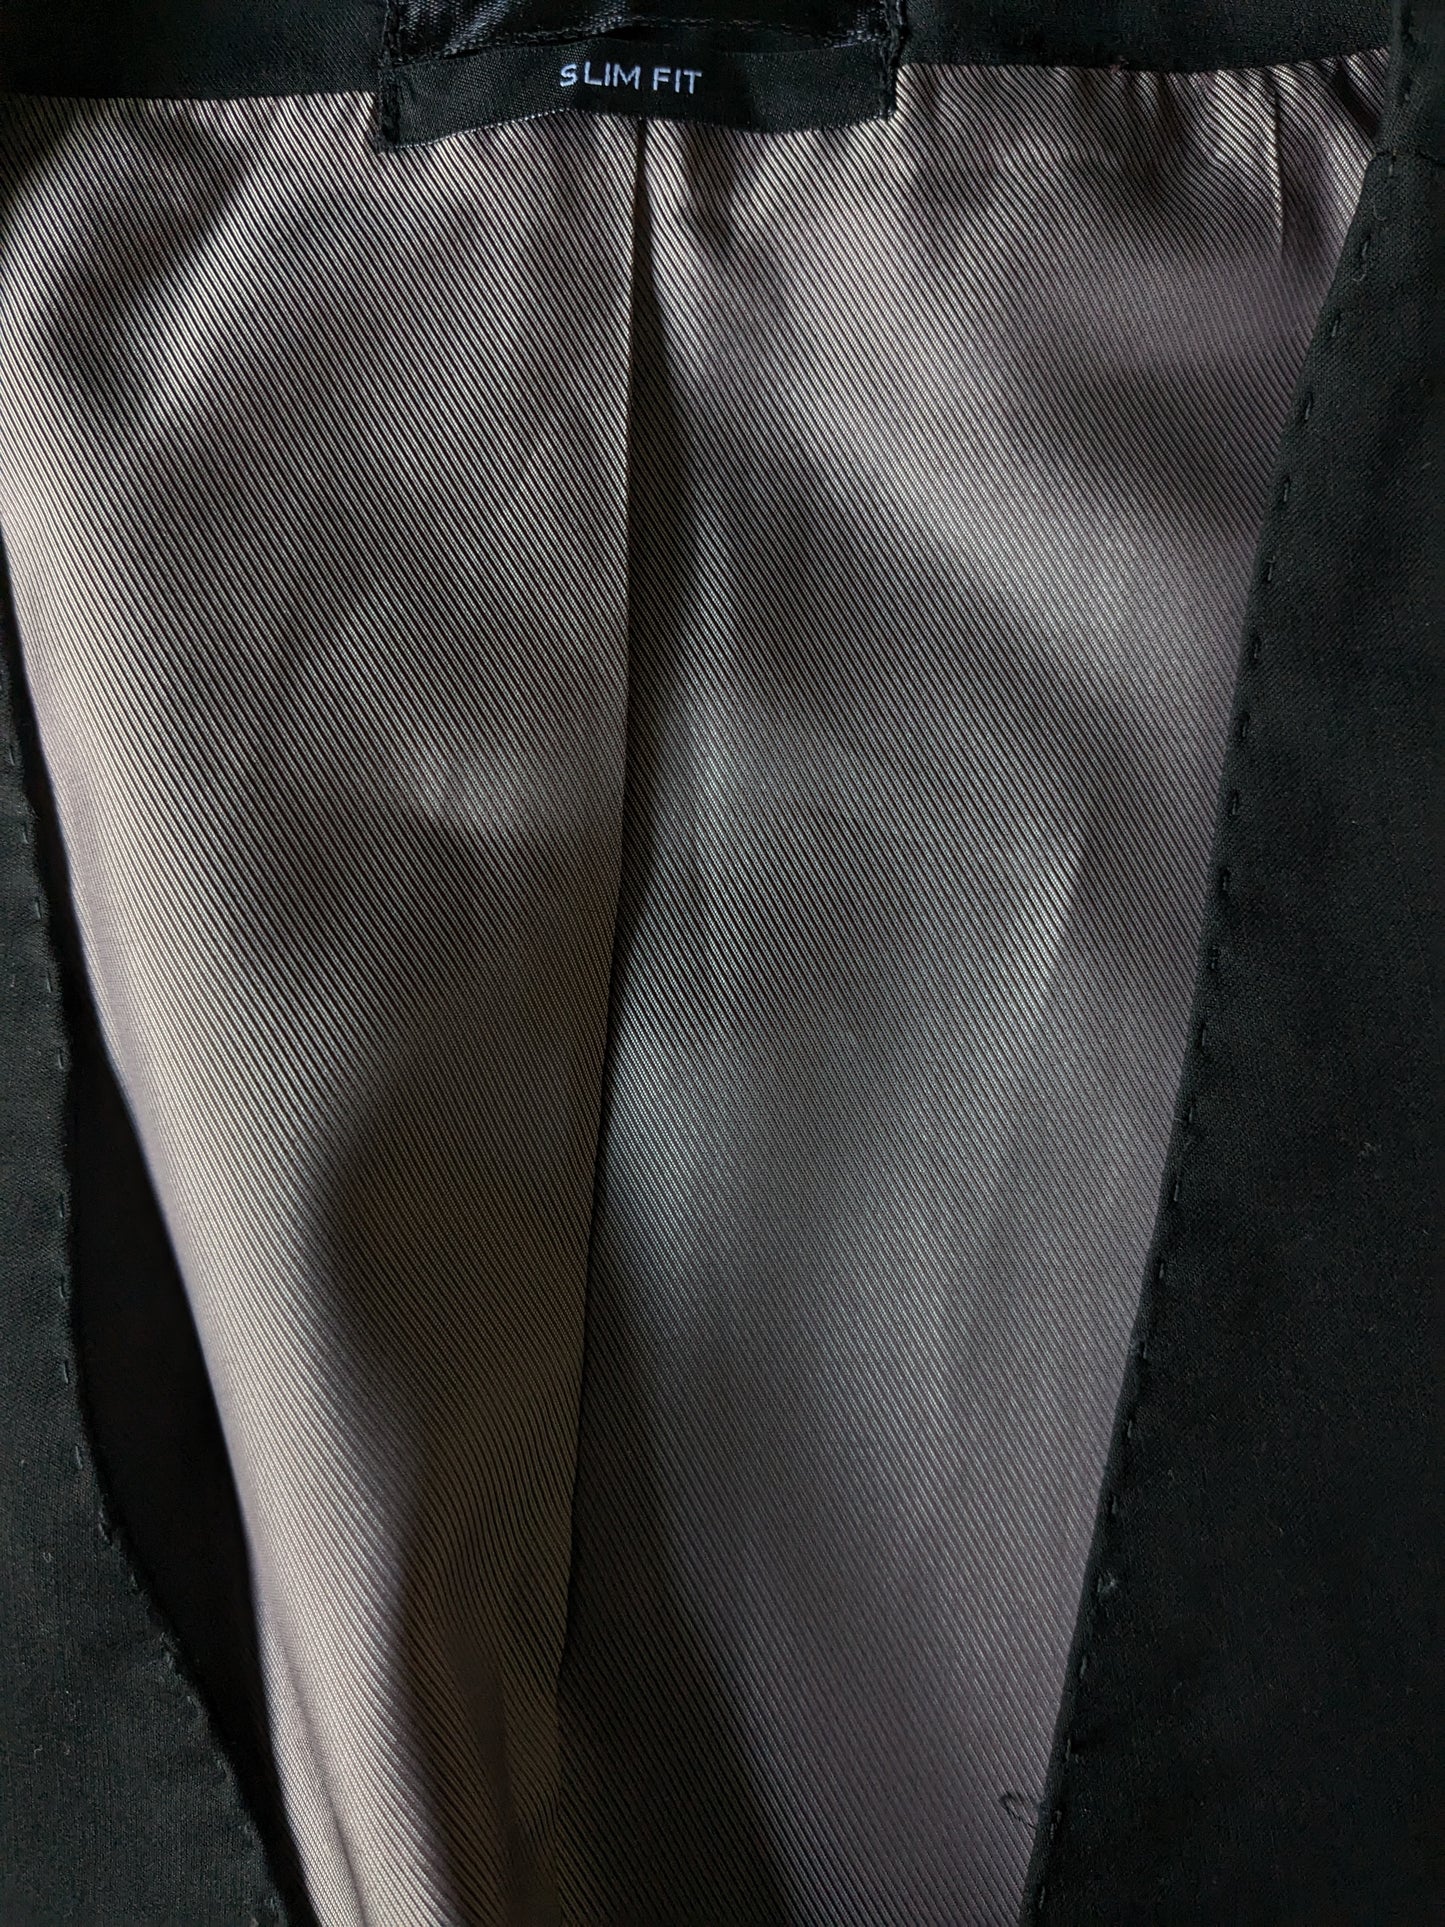 Cedar Wood State waistcoat. Black colored. Size L. Slim Fit. #339.